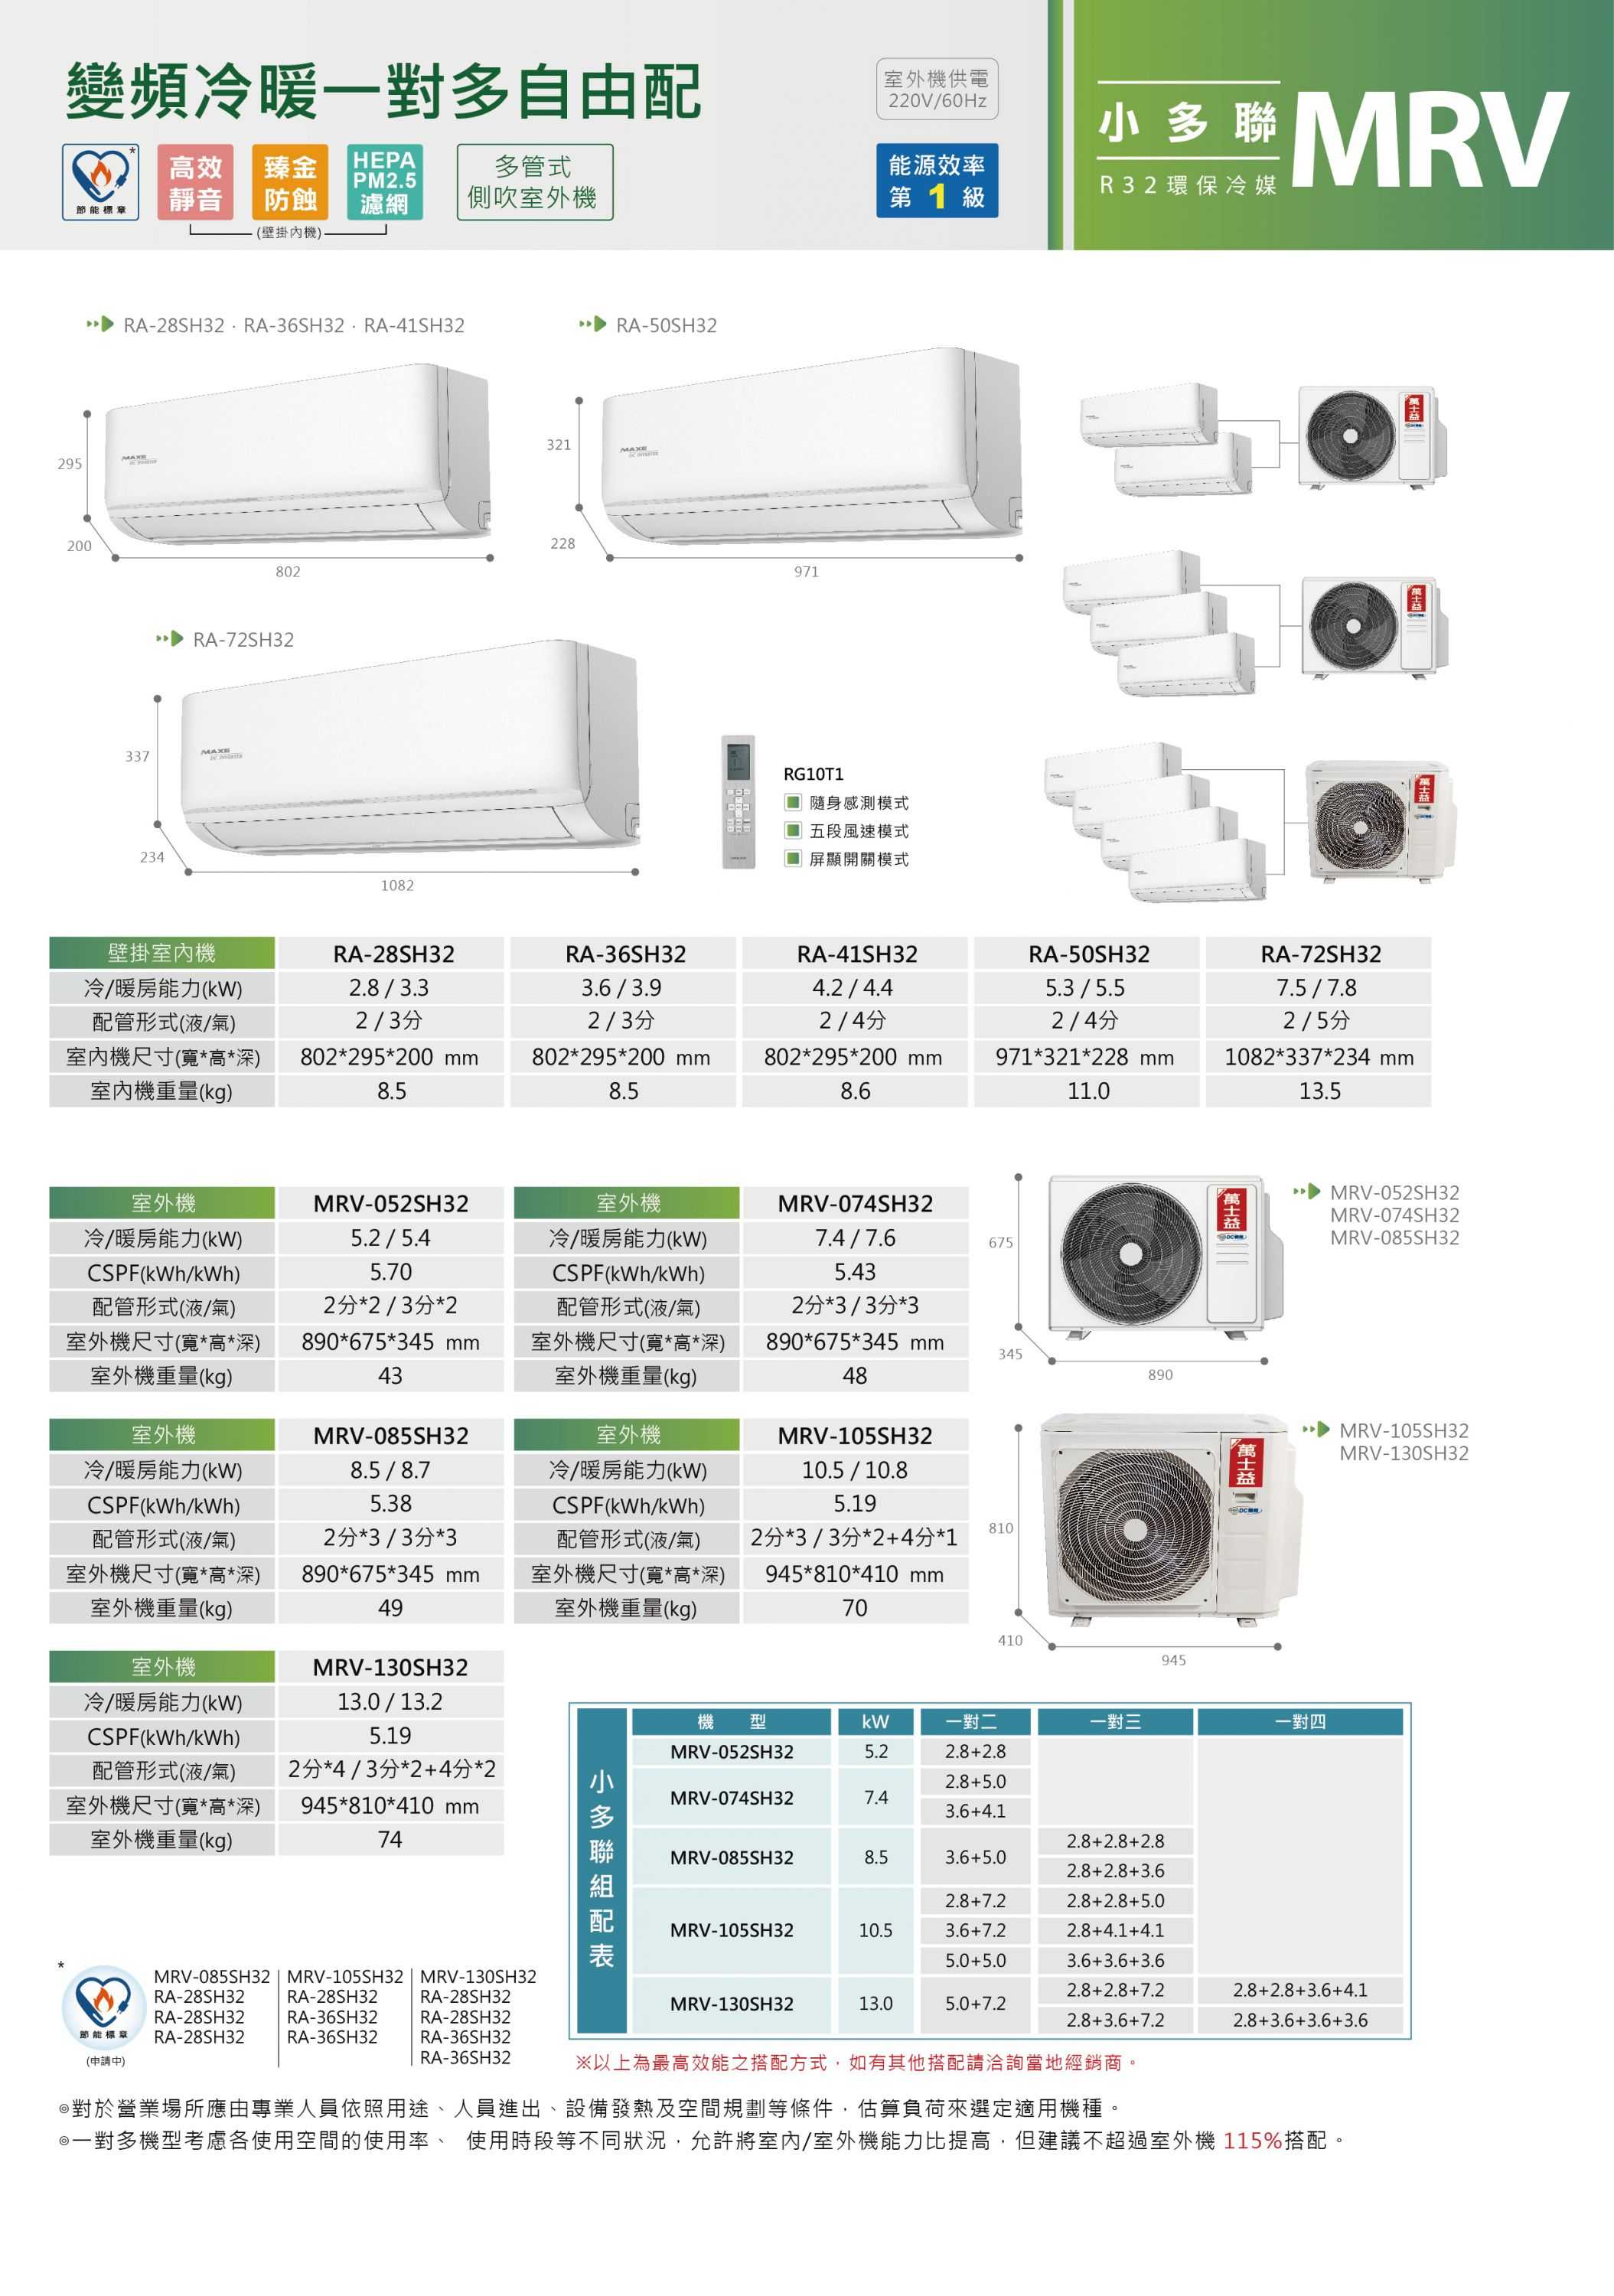 【MAXE 萬士益】壁掛式冷氣 一對二 一對多 變頻冷暖室外機 MRV-130SH32 (客服詢問客訂區下單)